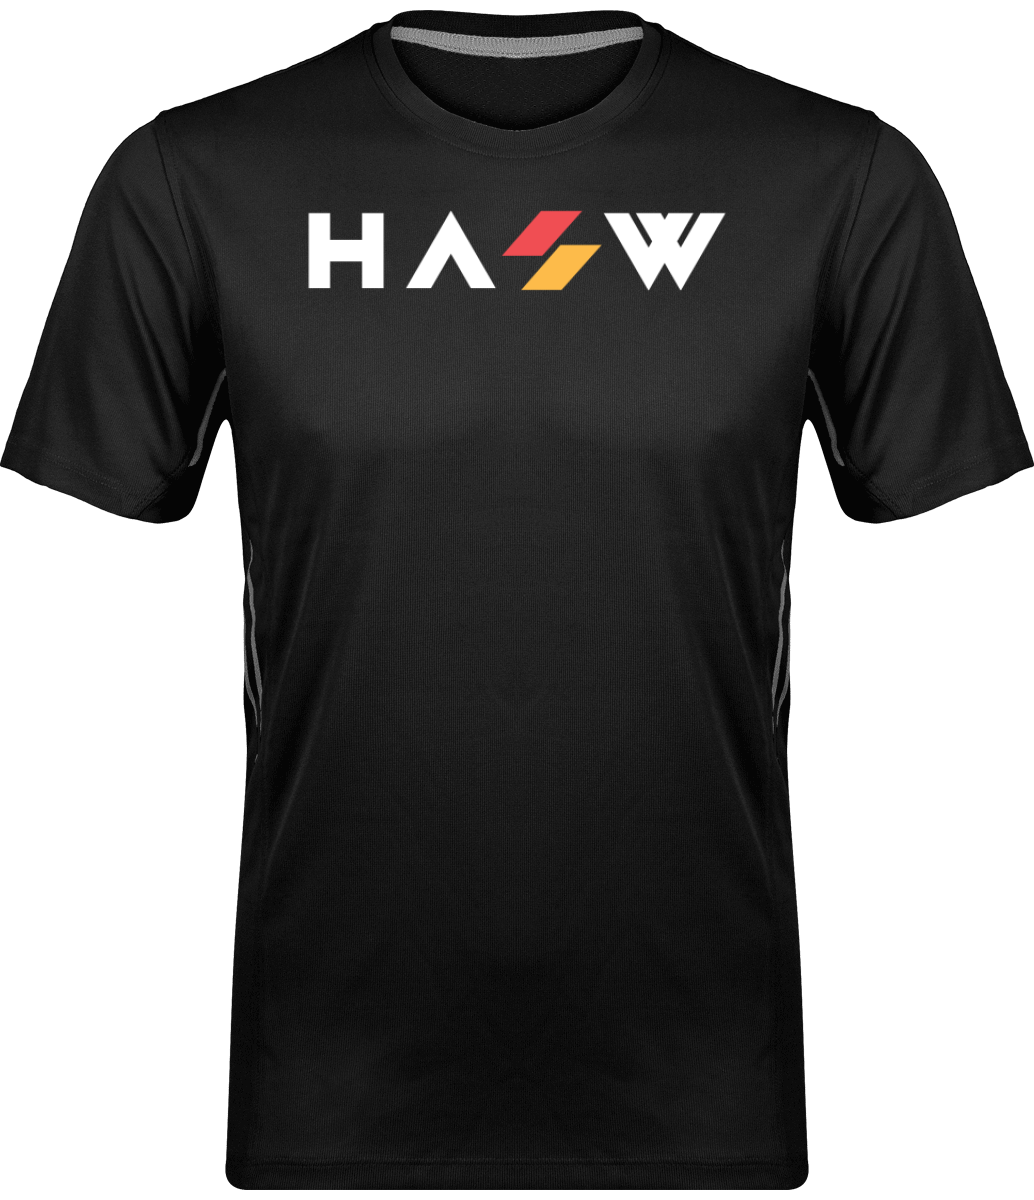 Test Sport Tshirt - HAOW